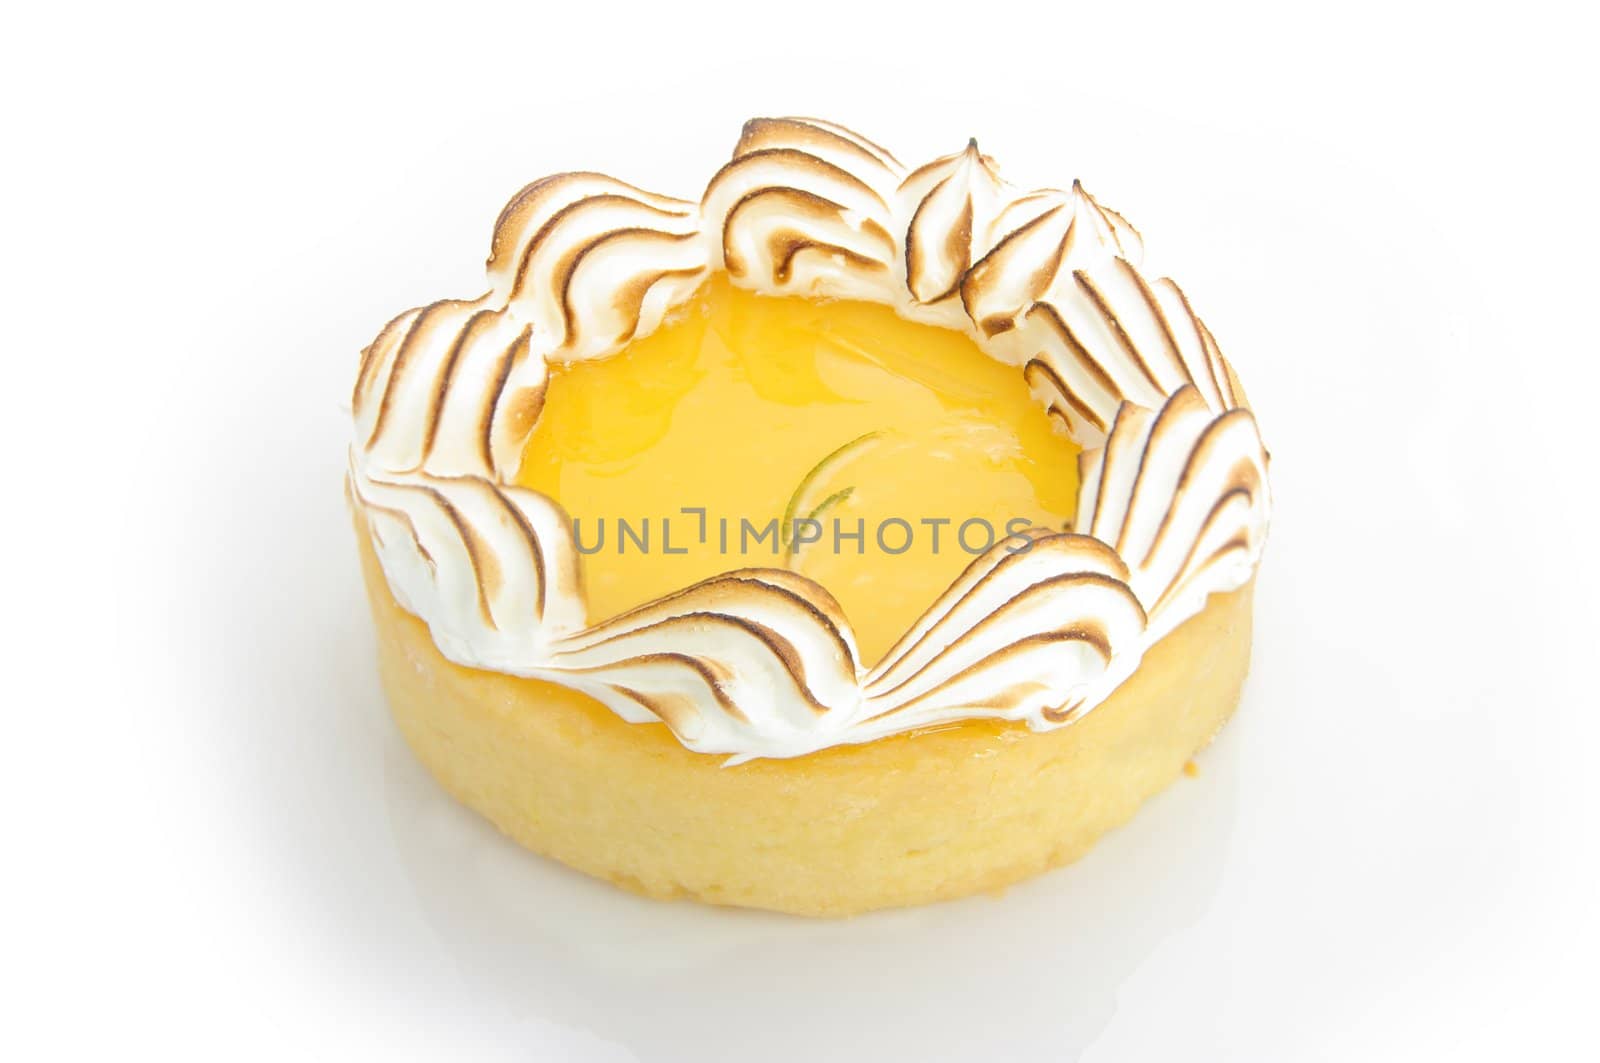 A delicious single serve lemon meringue tart. Shot on white